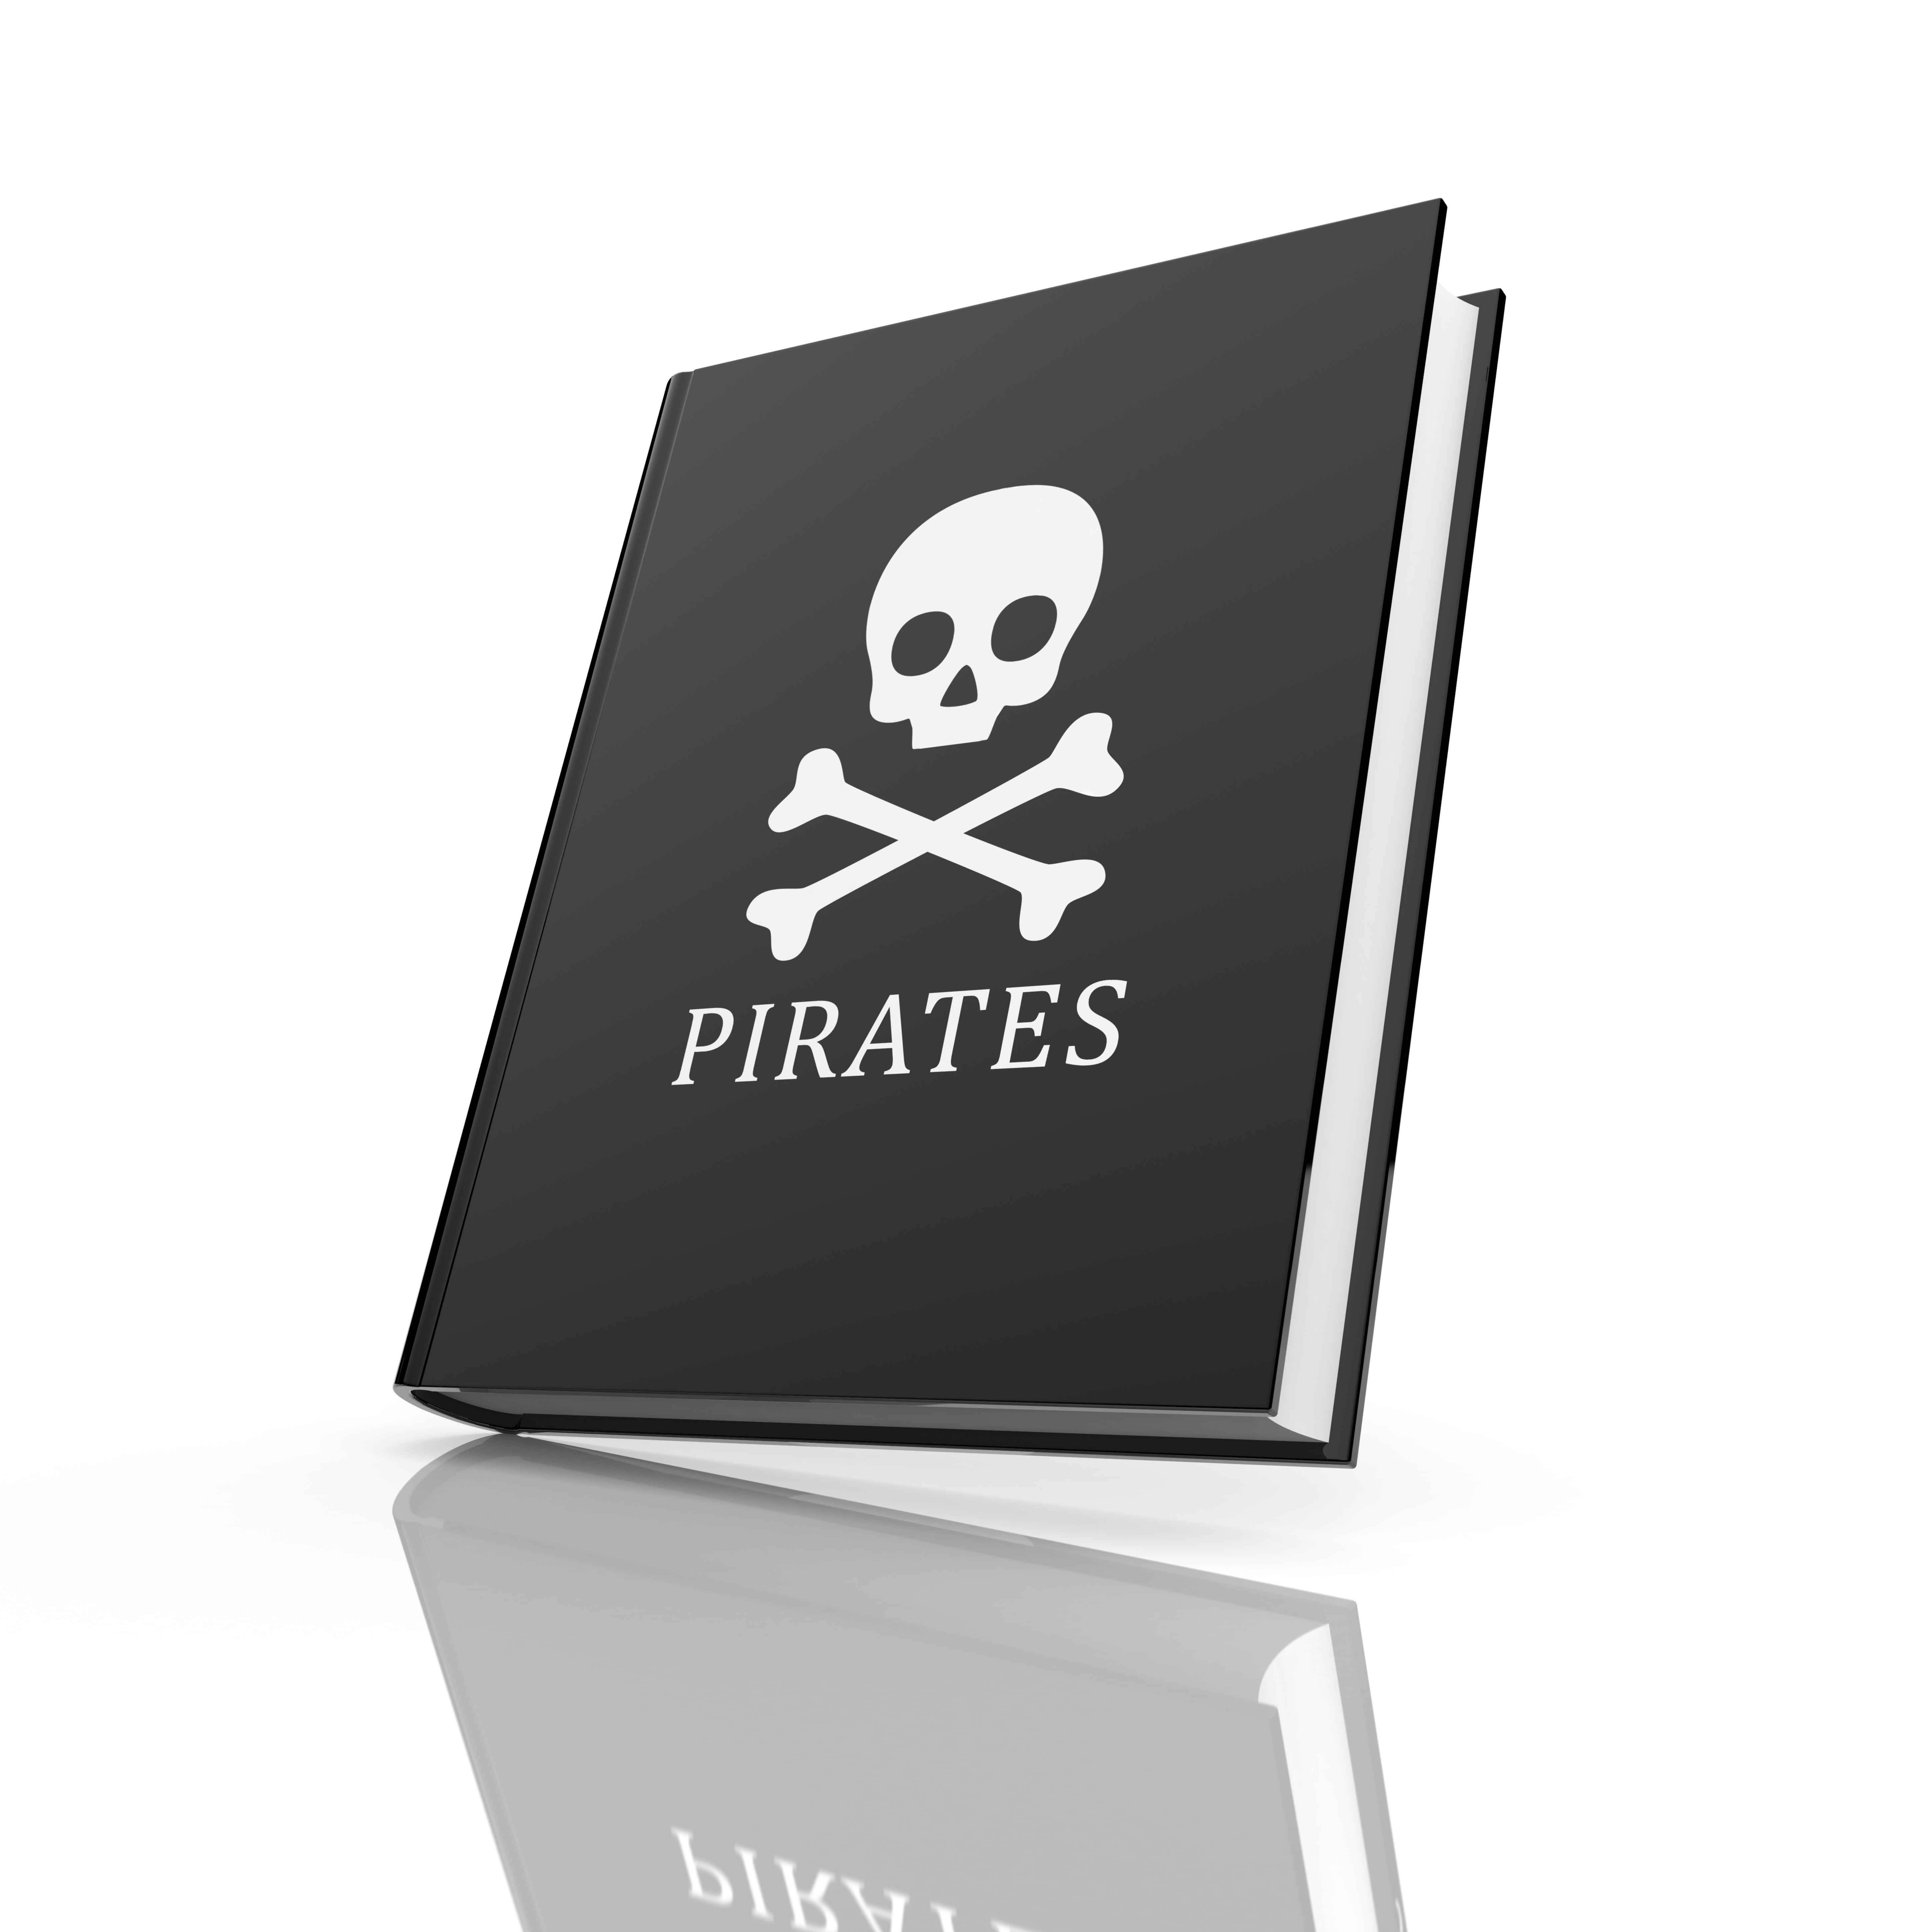 IP piracy - https://depositphotos.com/30014897/stock-photo-book-with-pirates-flag.html